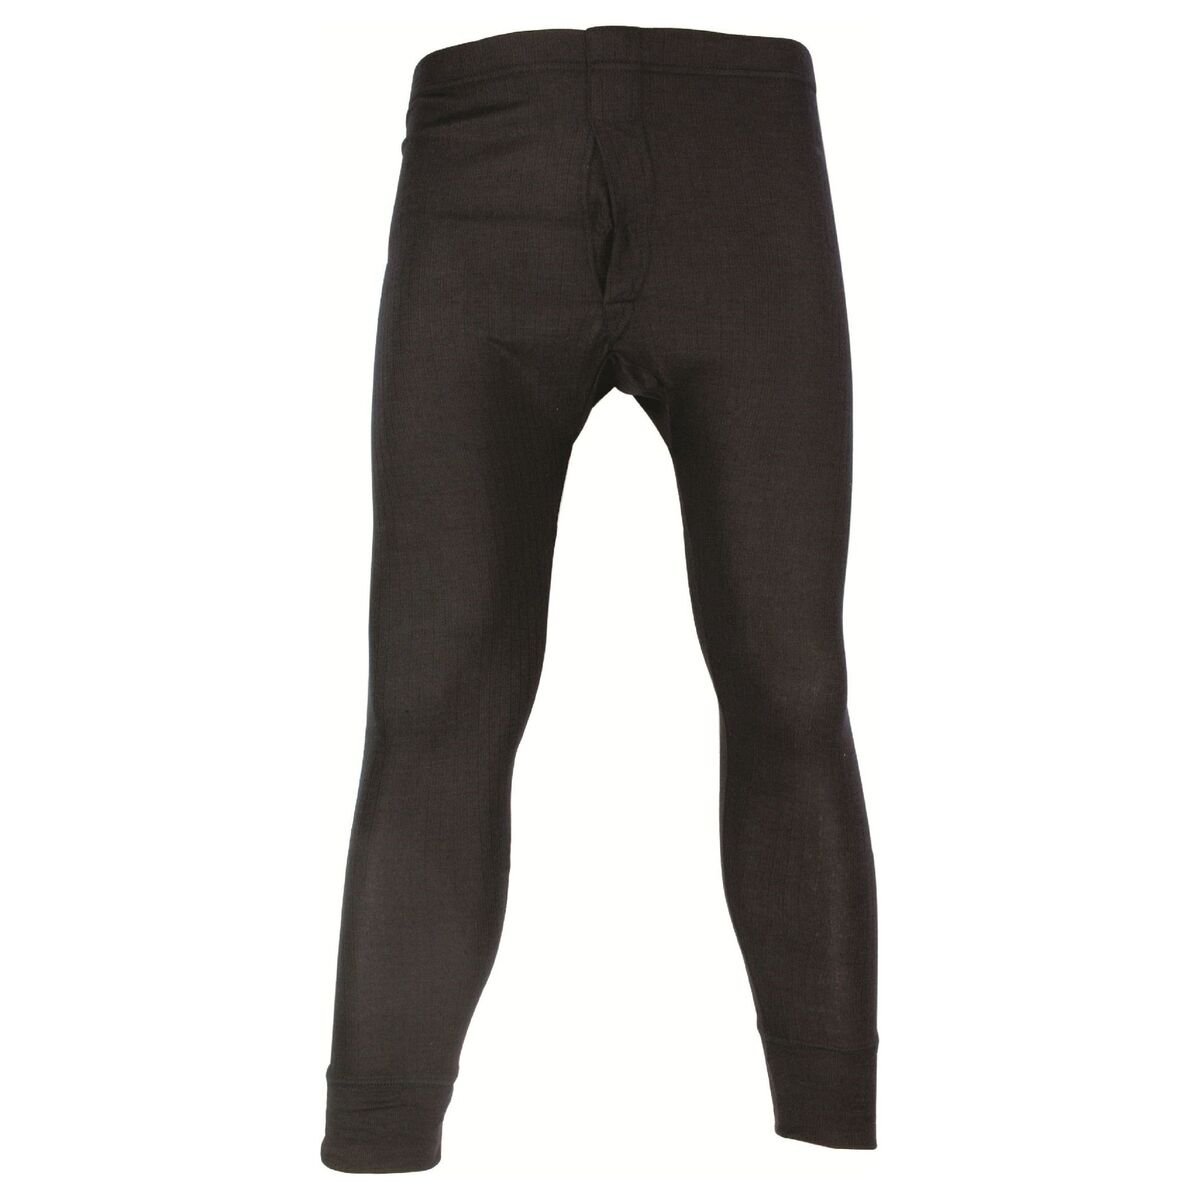 Highlander Thermal Base Layer Leggings Army Style Long Johns Underwear -  Black